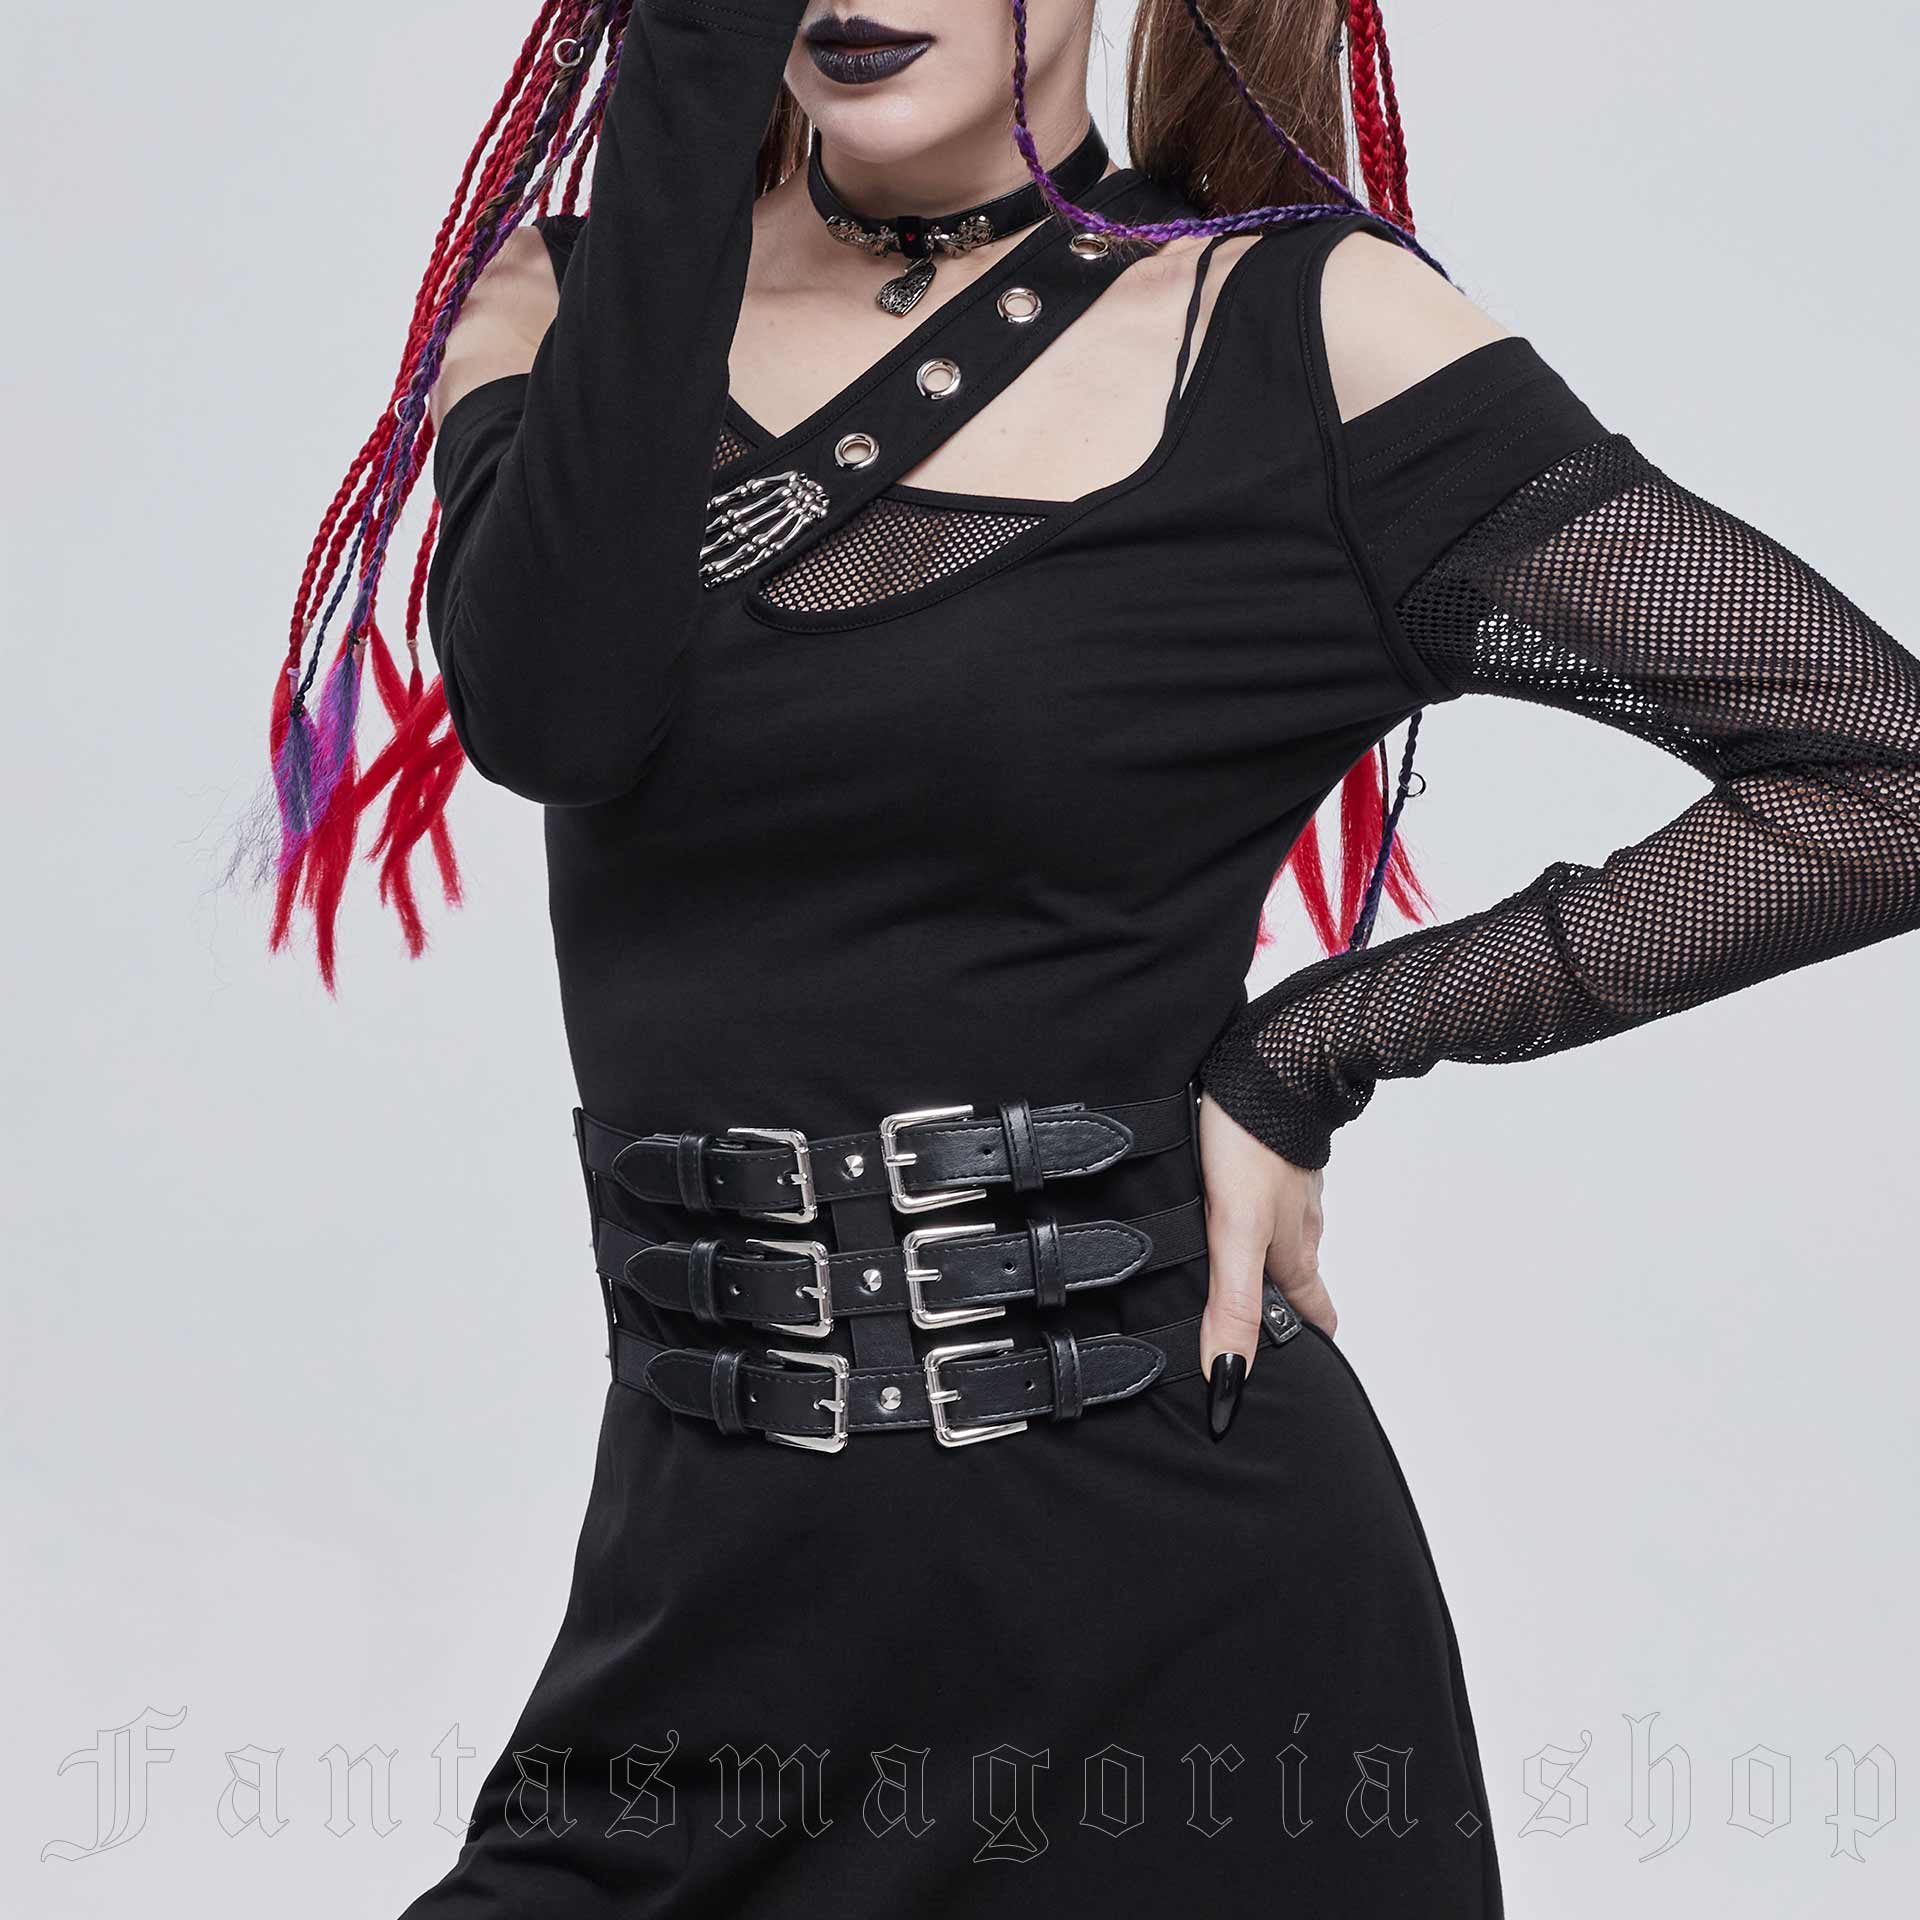 corset (belt) DEVIL FASHION - Laying Down The Law Punk Metallic